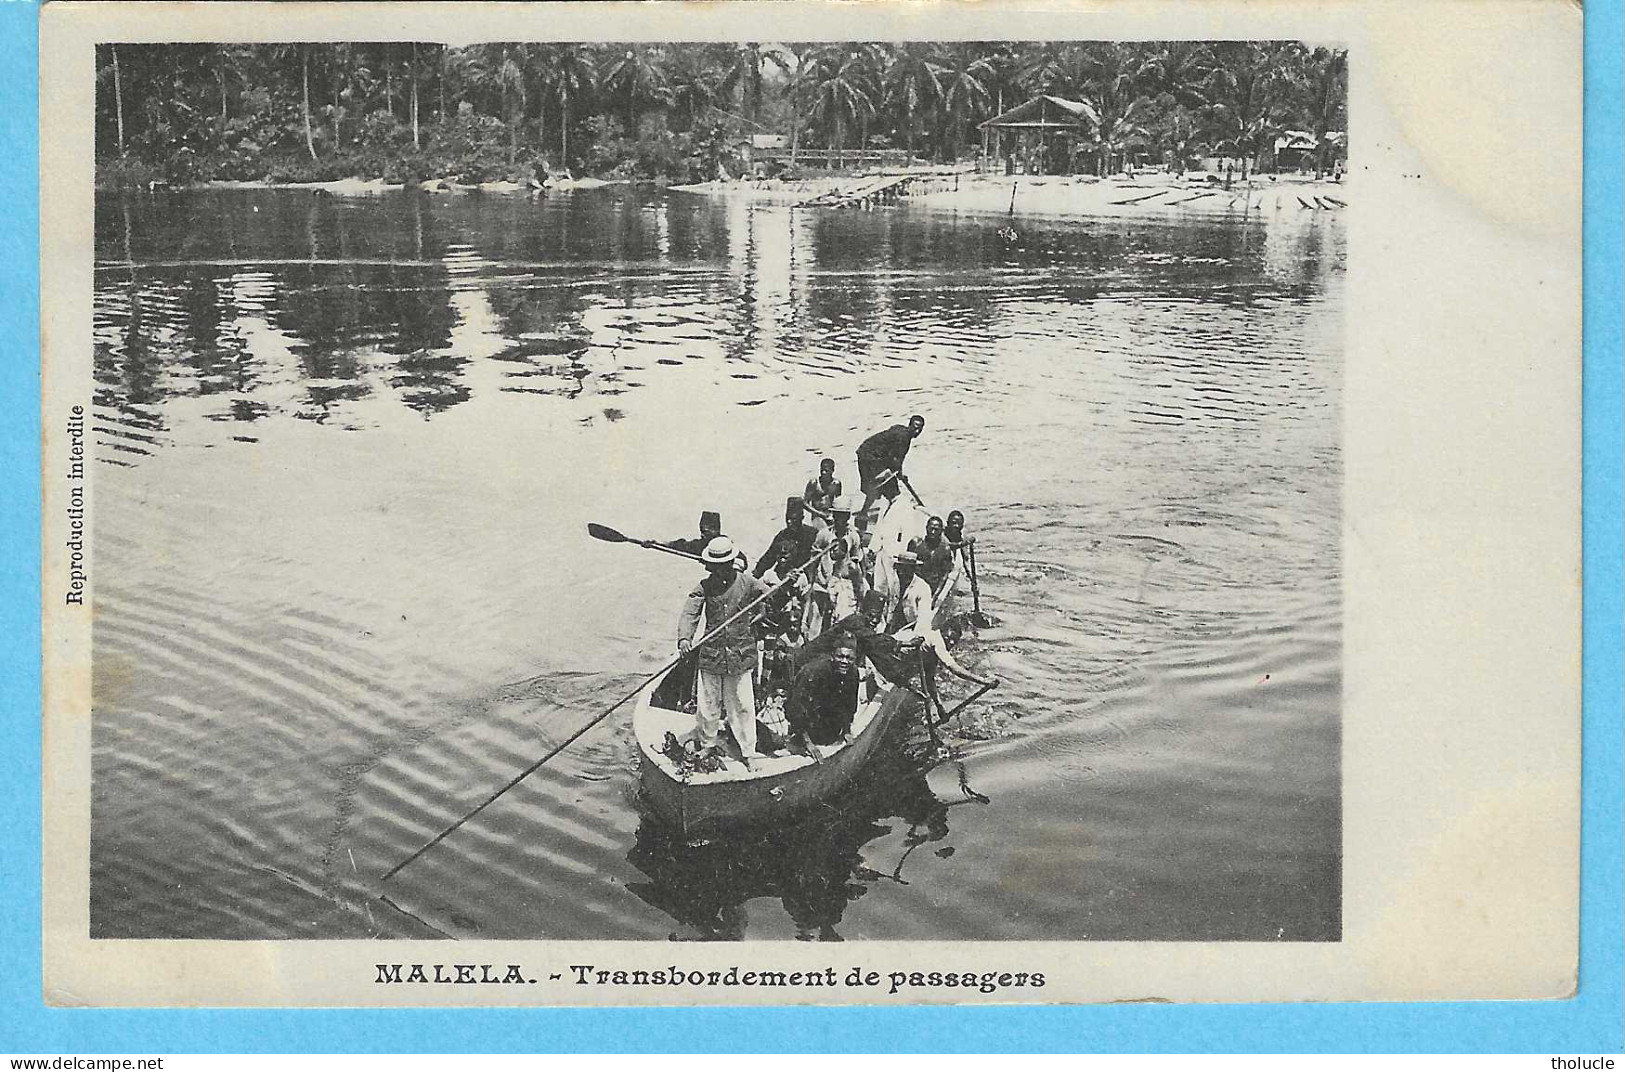 Timbre Type Mols-Congo Belge Unilingue-1909 10c Carmin-N°51-Cachet "Boma-1910"-Malela-Transbordement De Passagers-Barque - Lettres & Documents